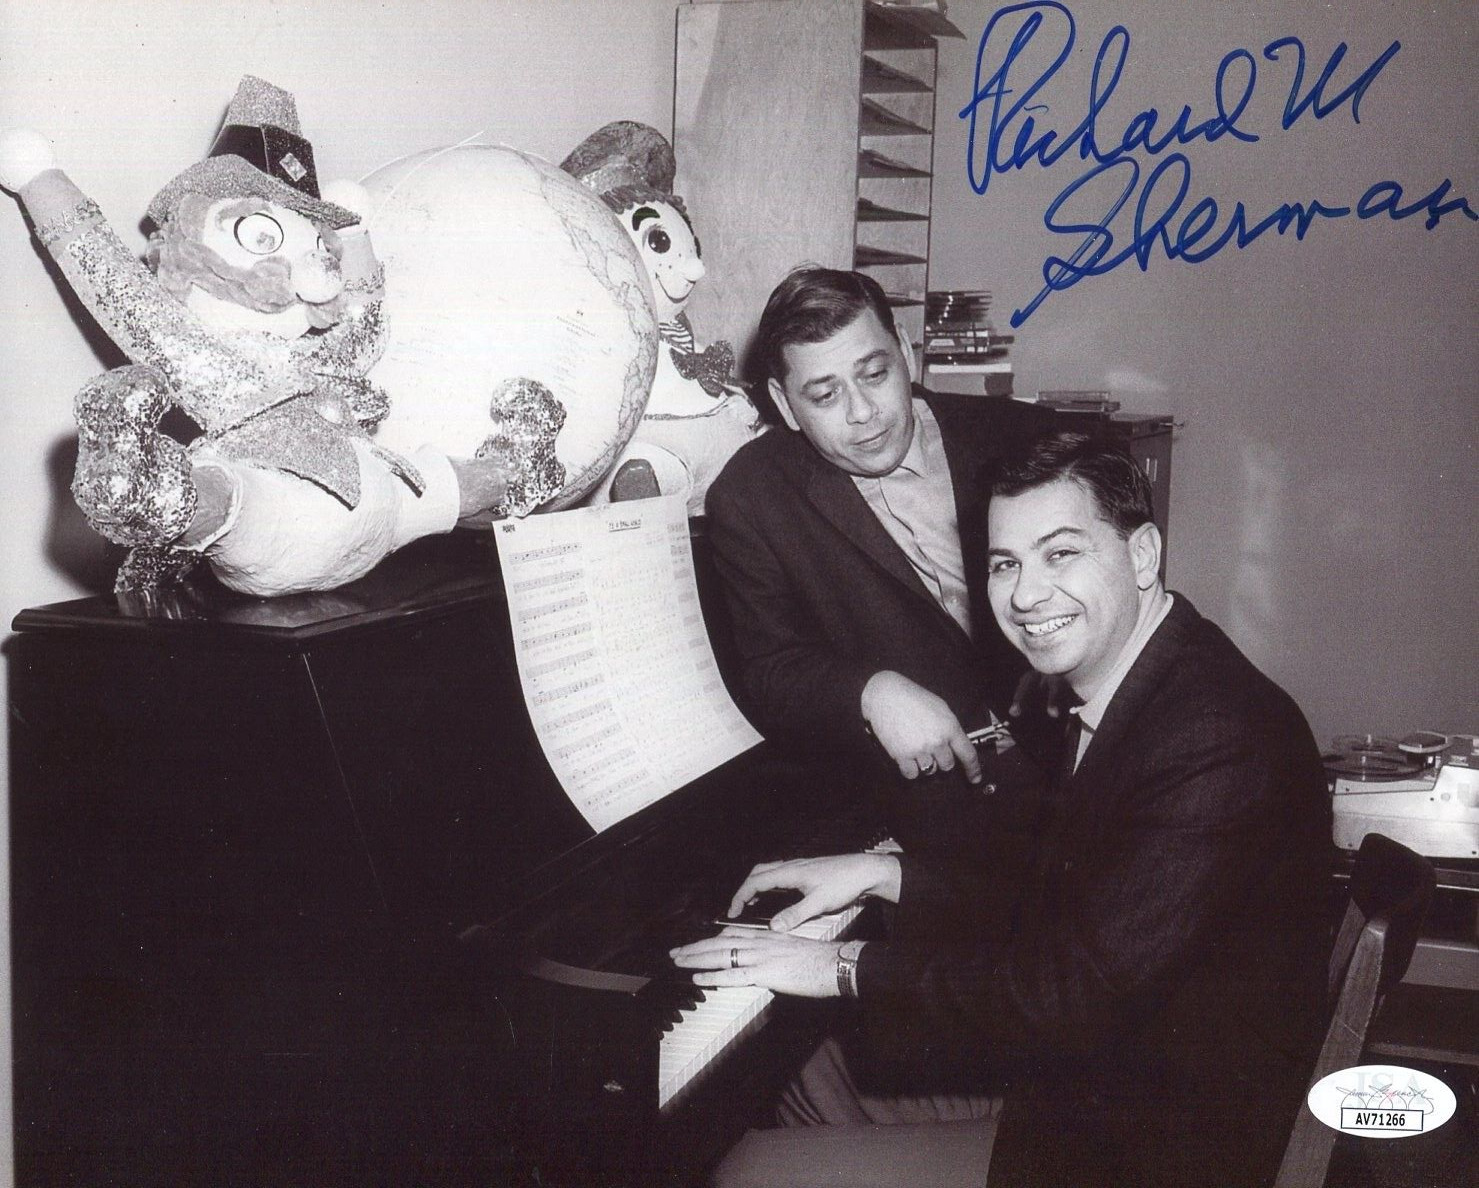 Richard Sherman Mary Poppins Disney Composer Signed Autograph Photo JSA